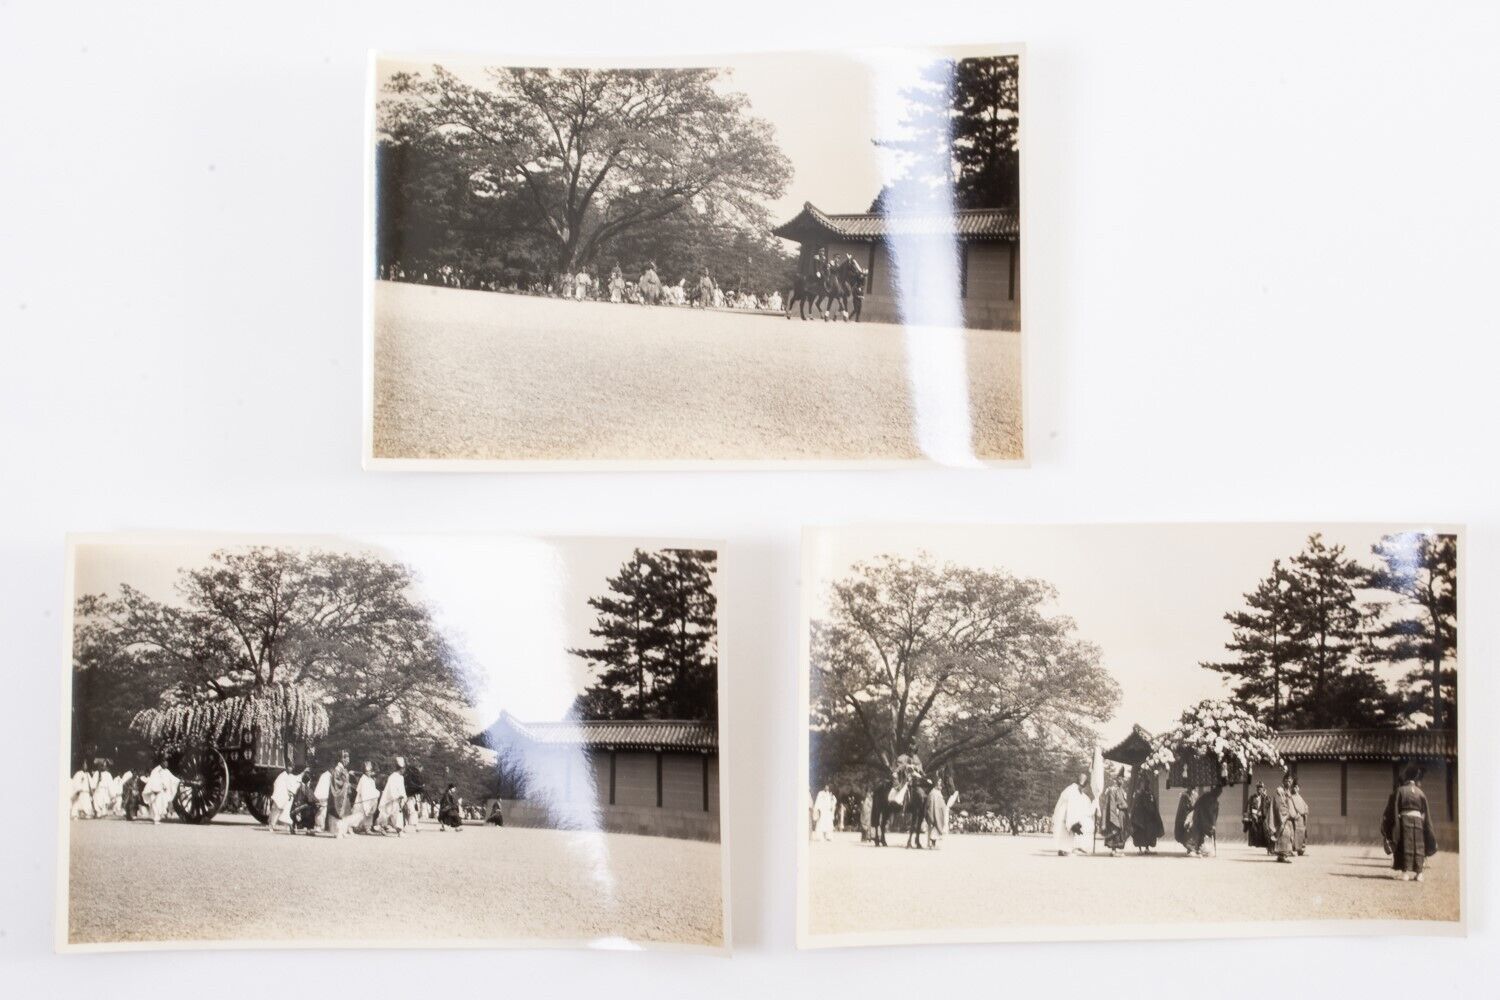 Lot of 3 Vintage Black & White Photographs Tokyo Japan Religious Ceremony